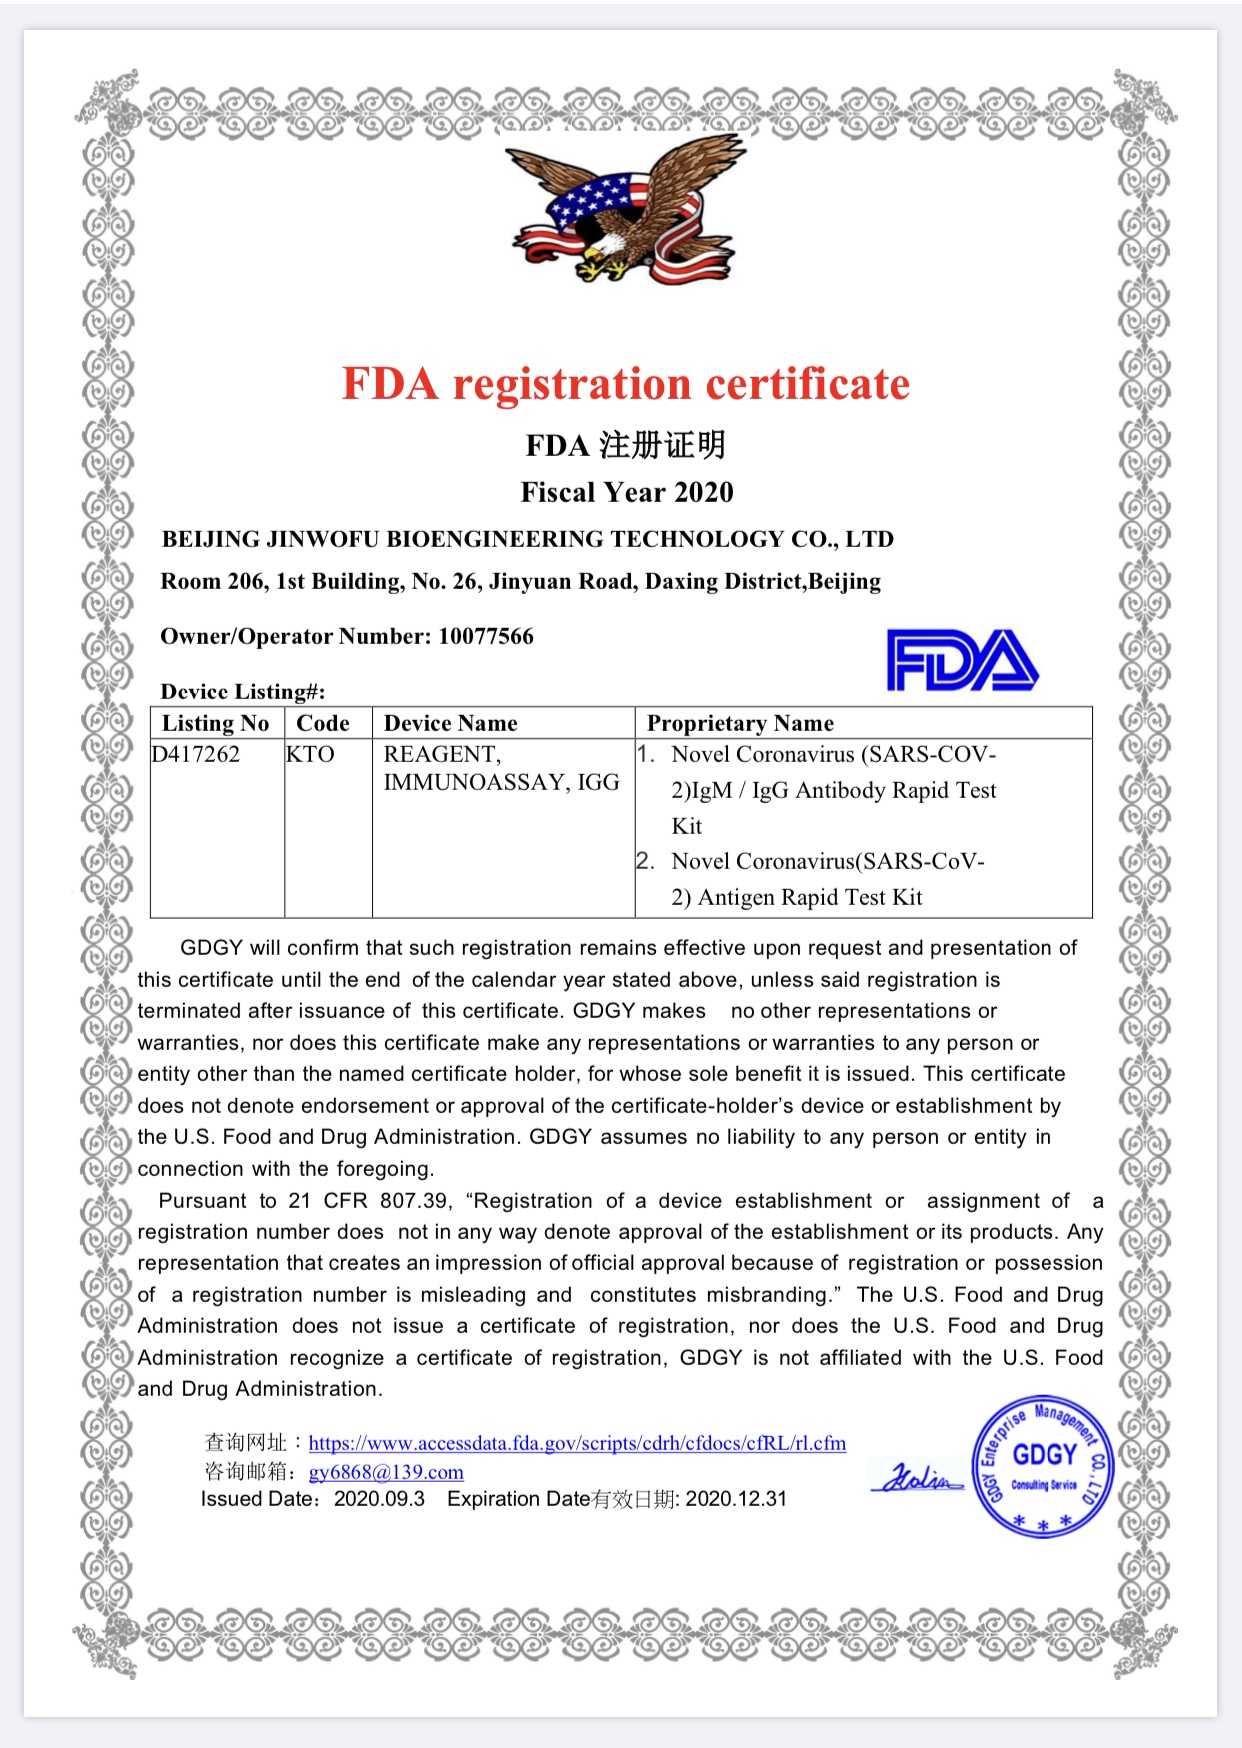 米国FDAの緊急使用認可（EUA）